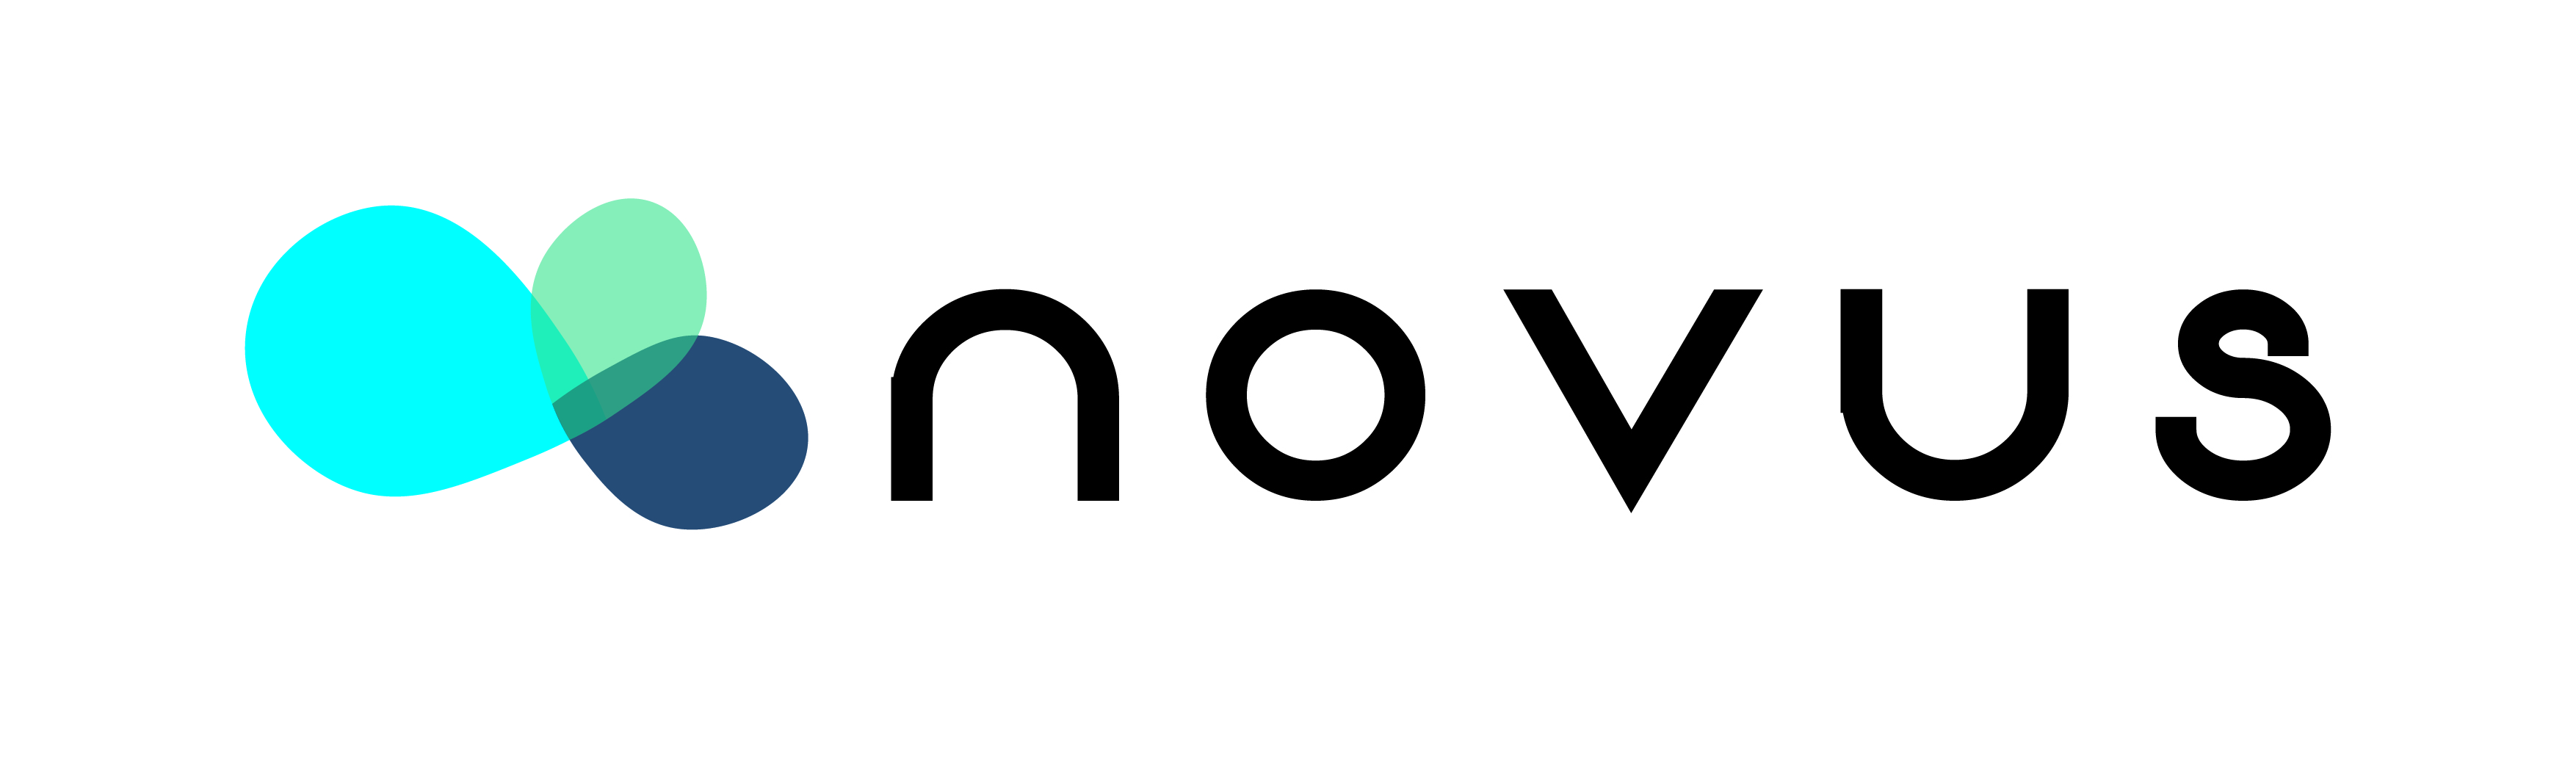 Novus Cloud logo